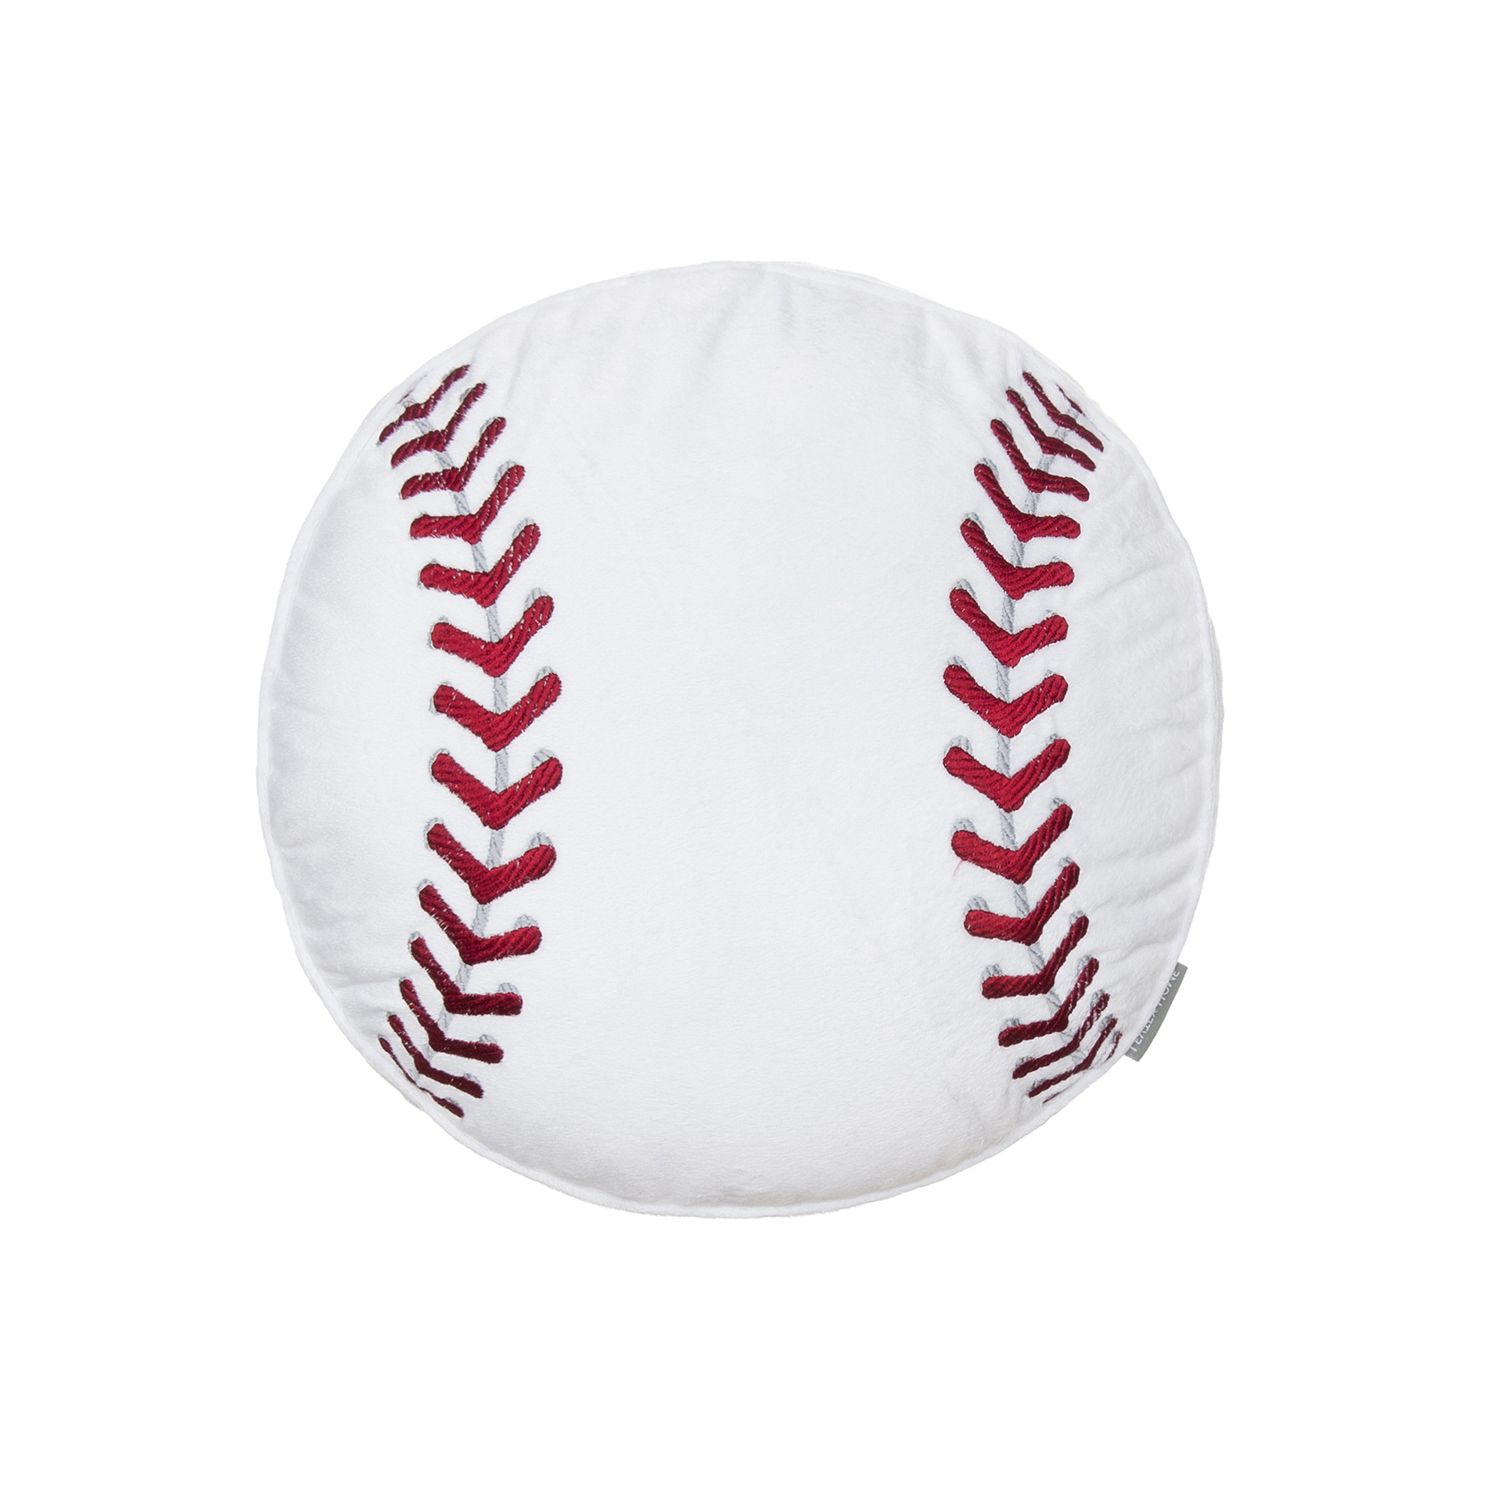 Image for Levtex Home MVP Baseball Throw Pillow at Kohl's.